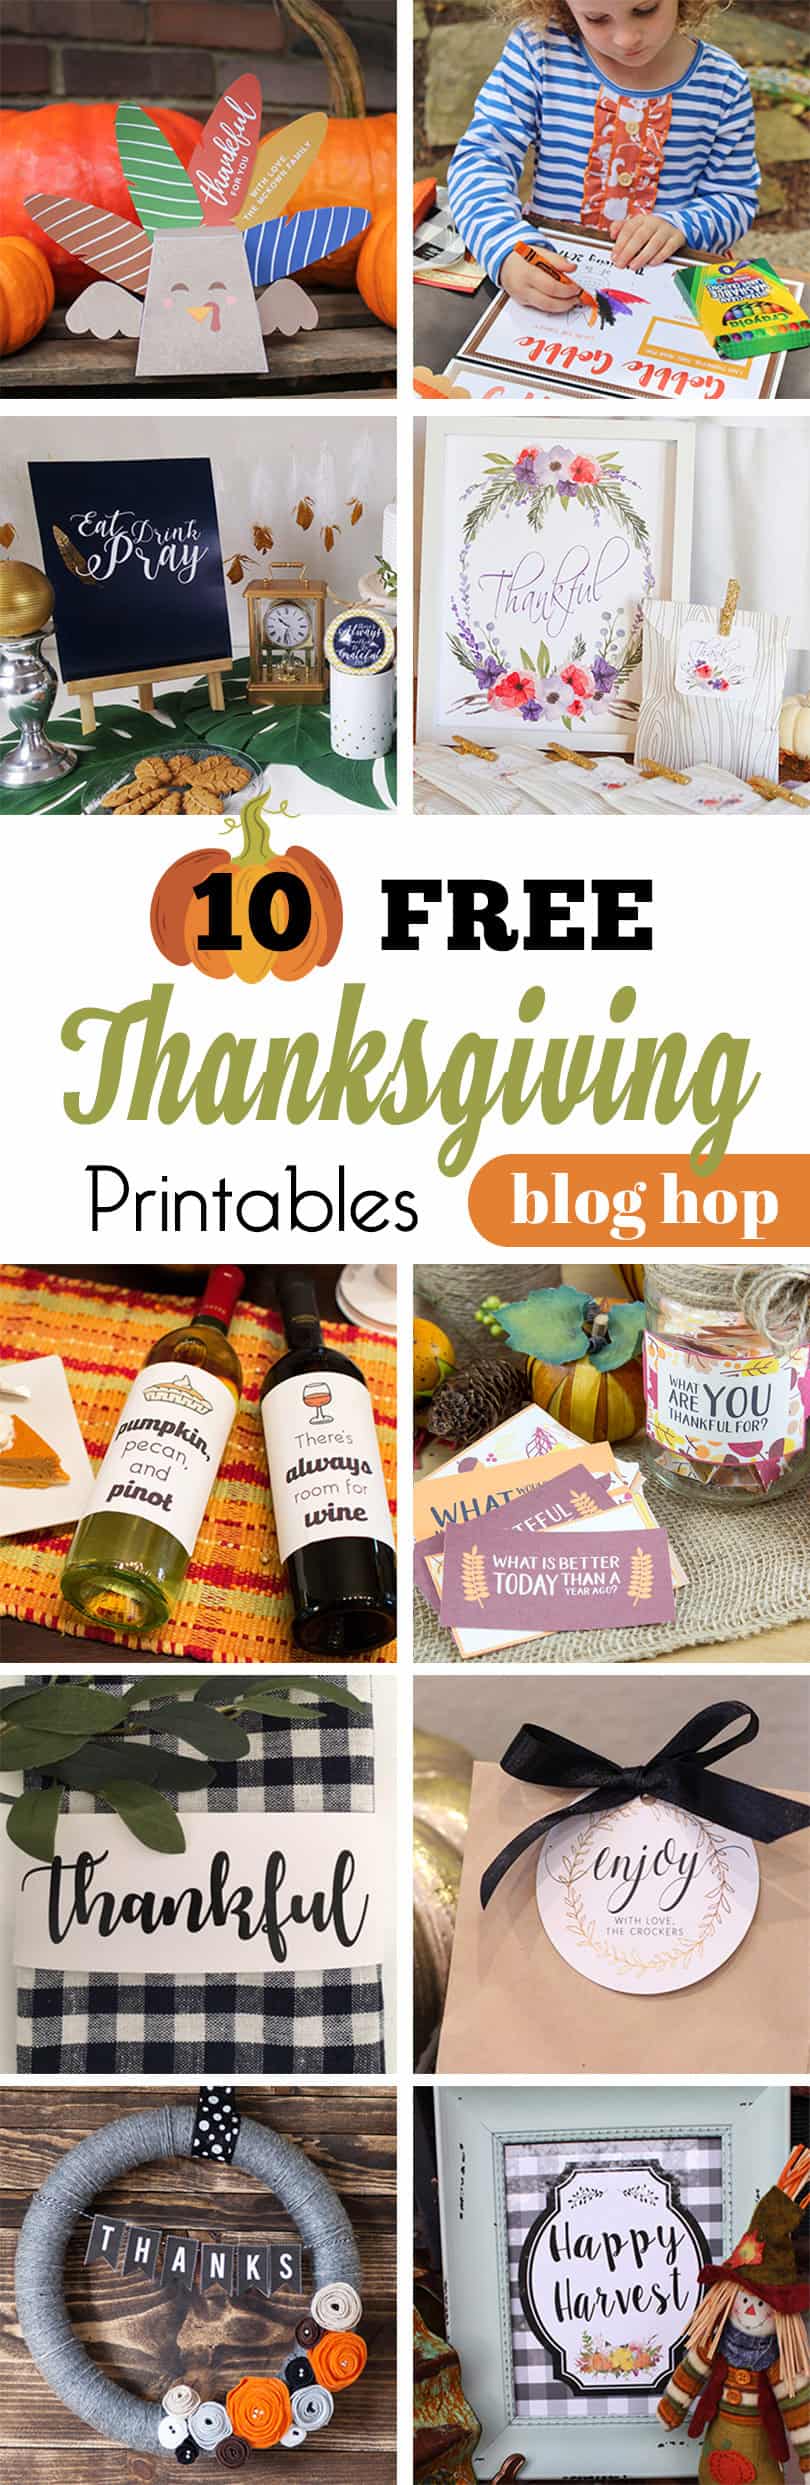 Free Thanksgiving Printables Blog Hop